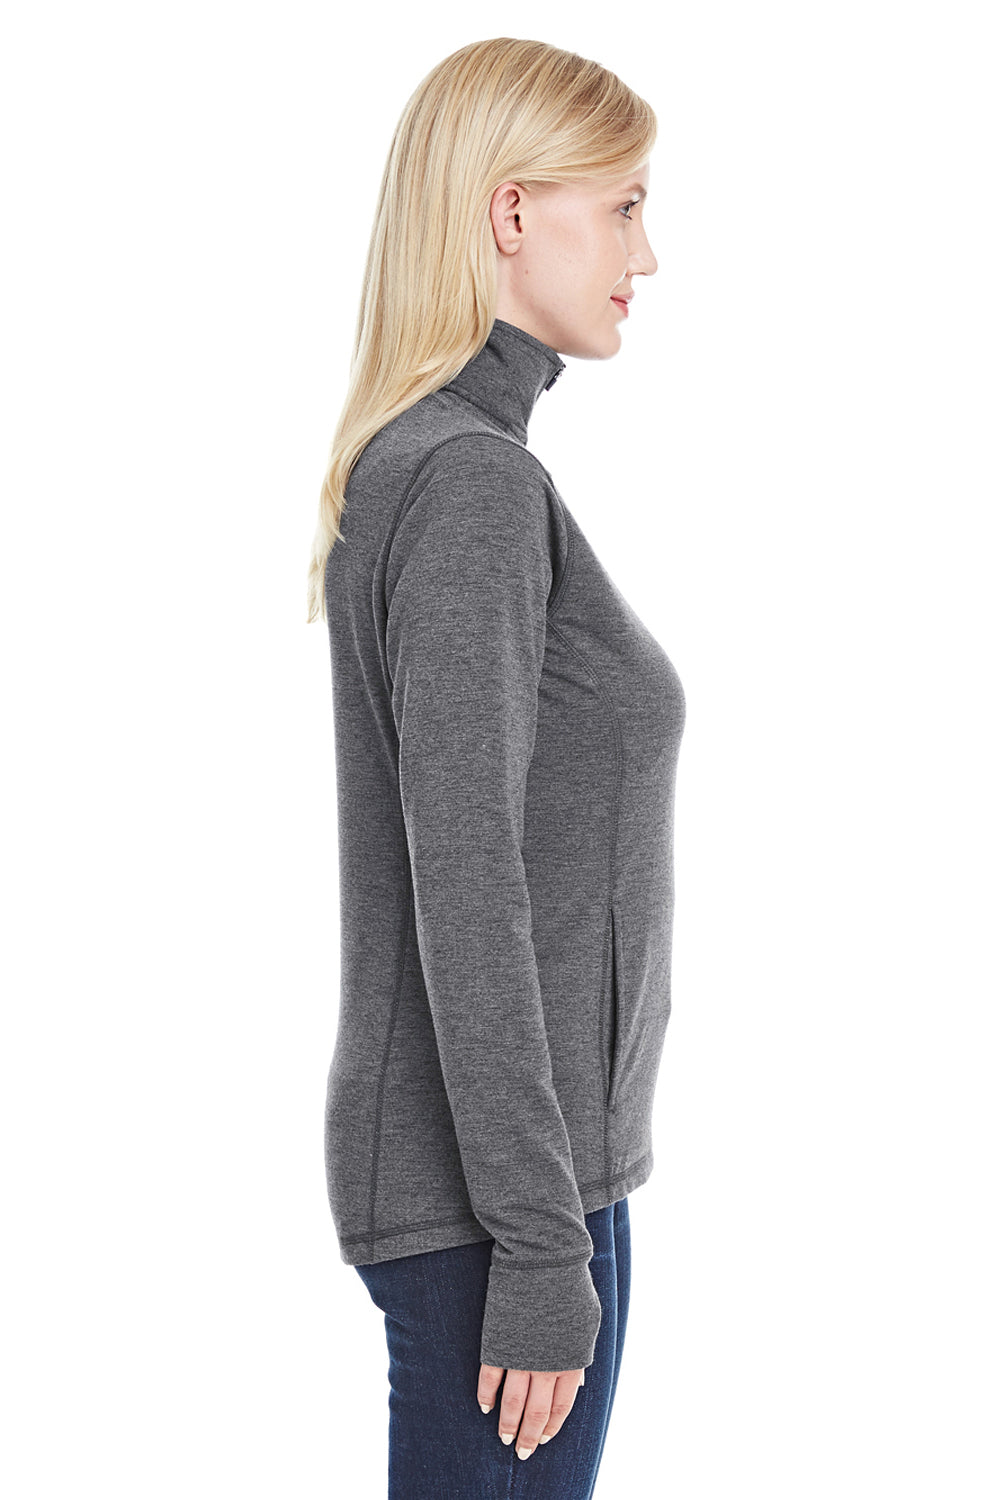 J America JA8433 Womens Omega Sueded Terry 1/4 Zip Sweatshirt Charcoal Grey Side